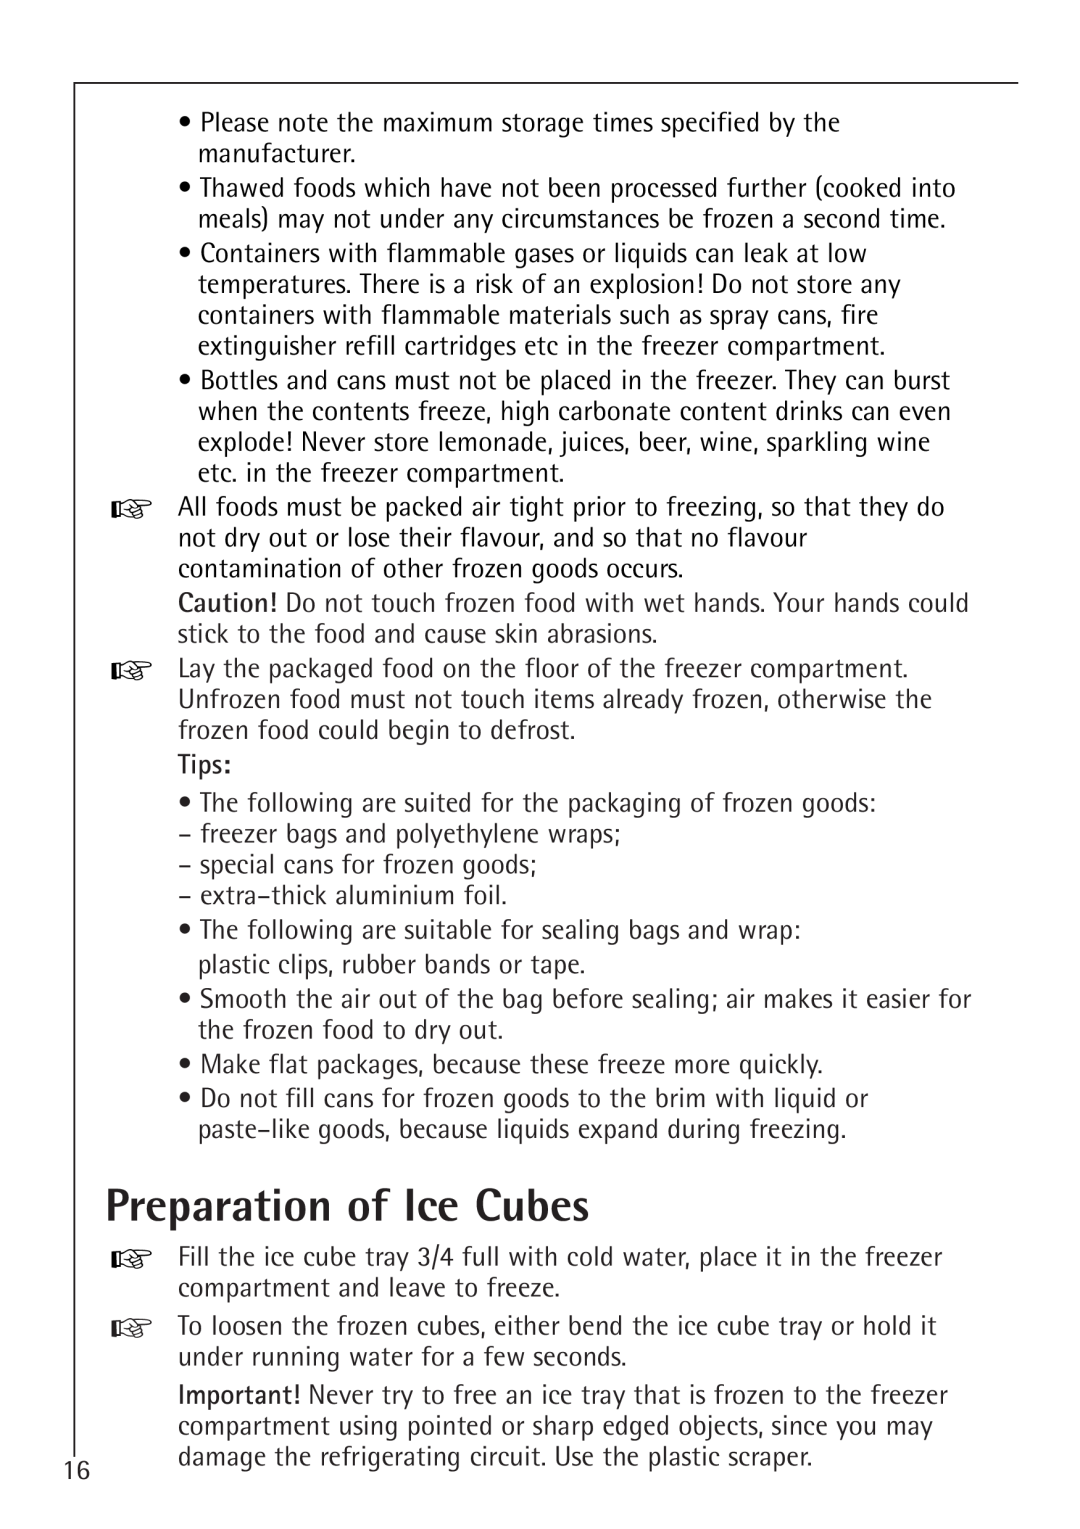 AEG 1450-7 TK manual Preparation of Ice Cubes, Tips 